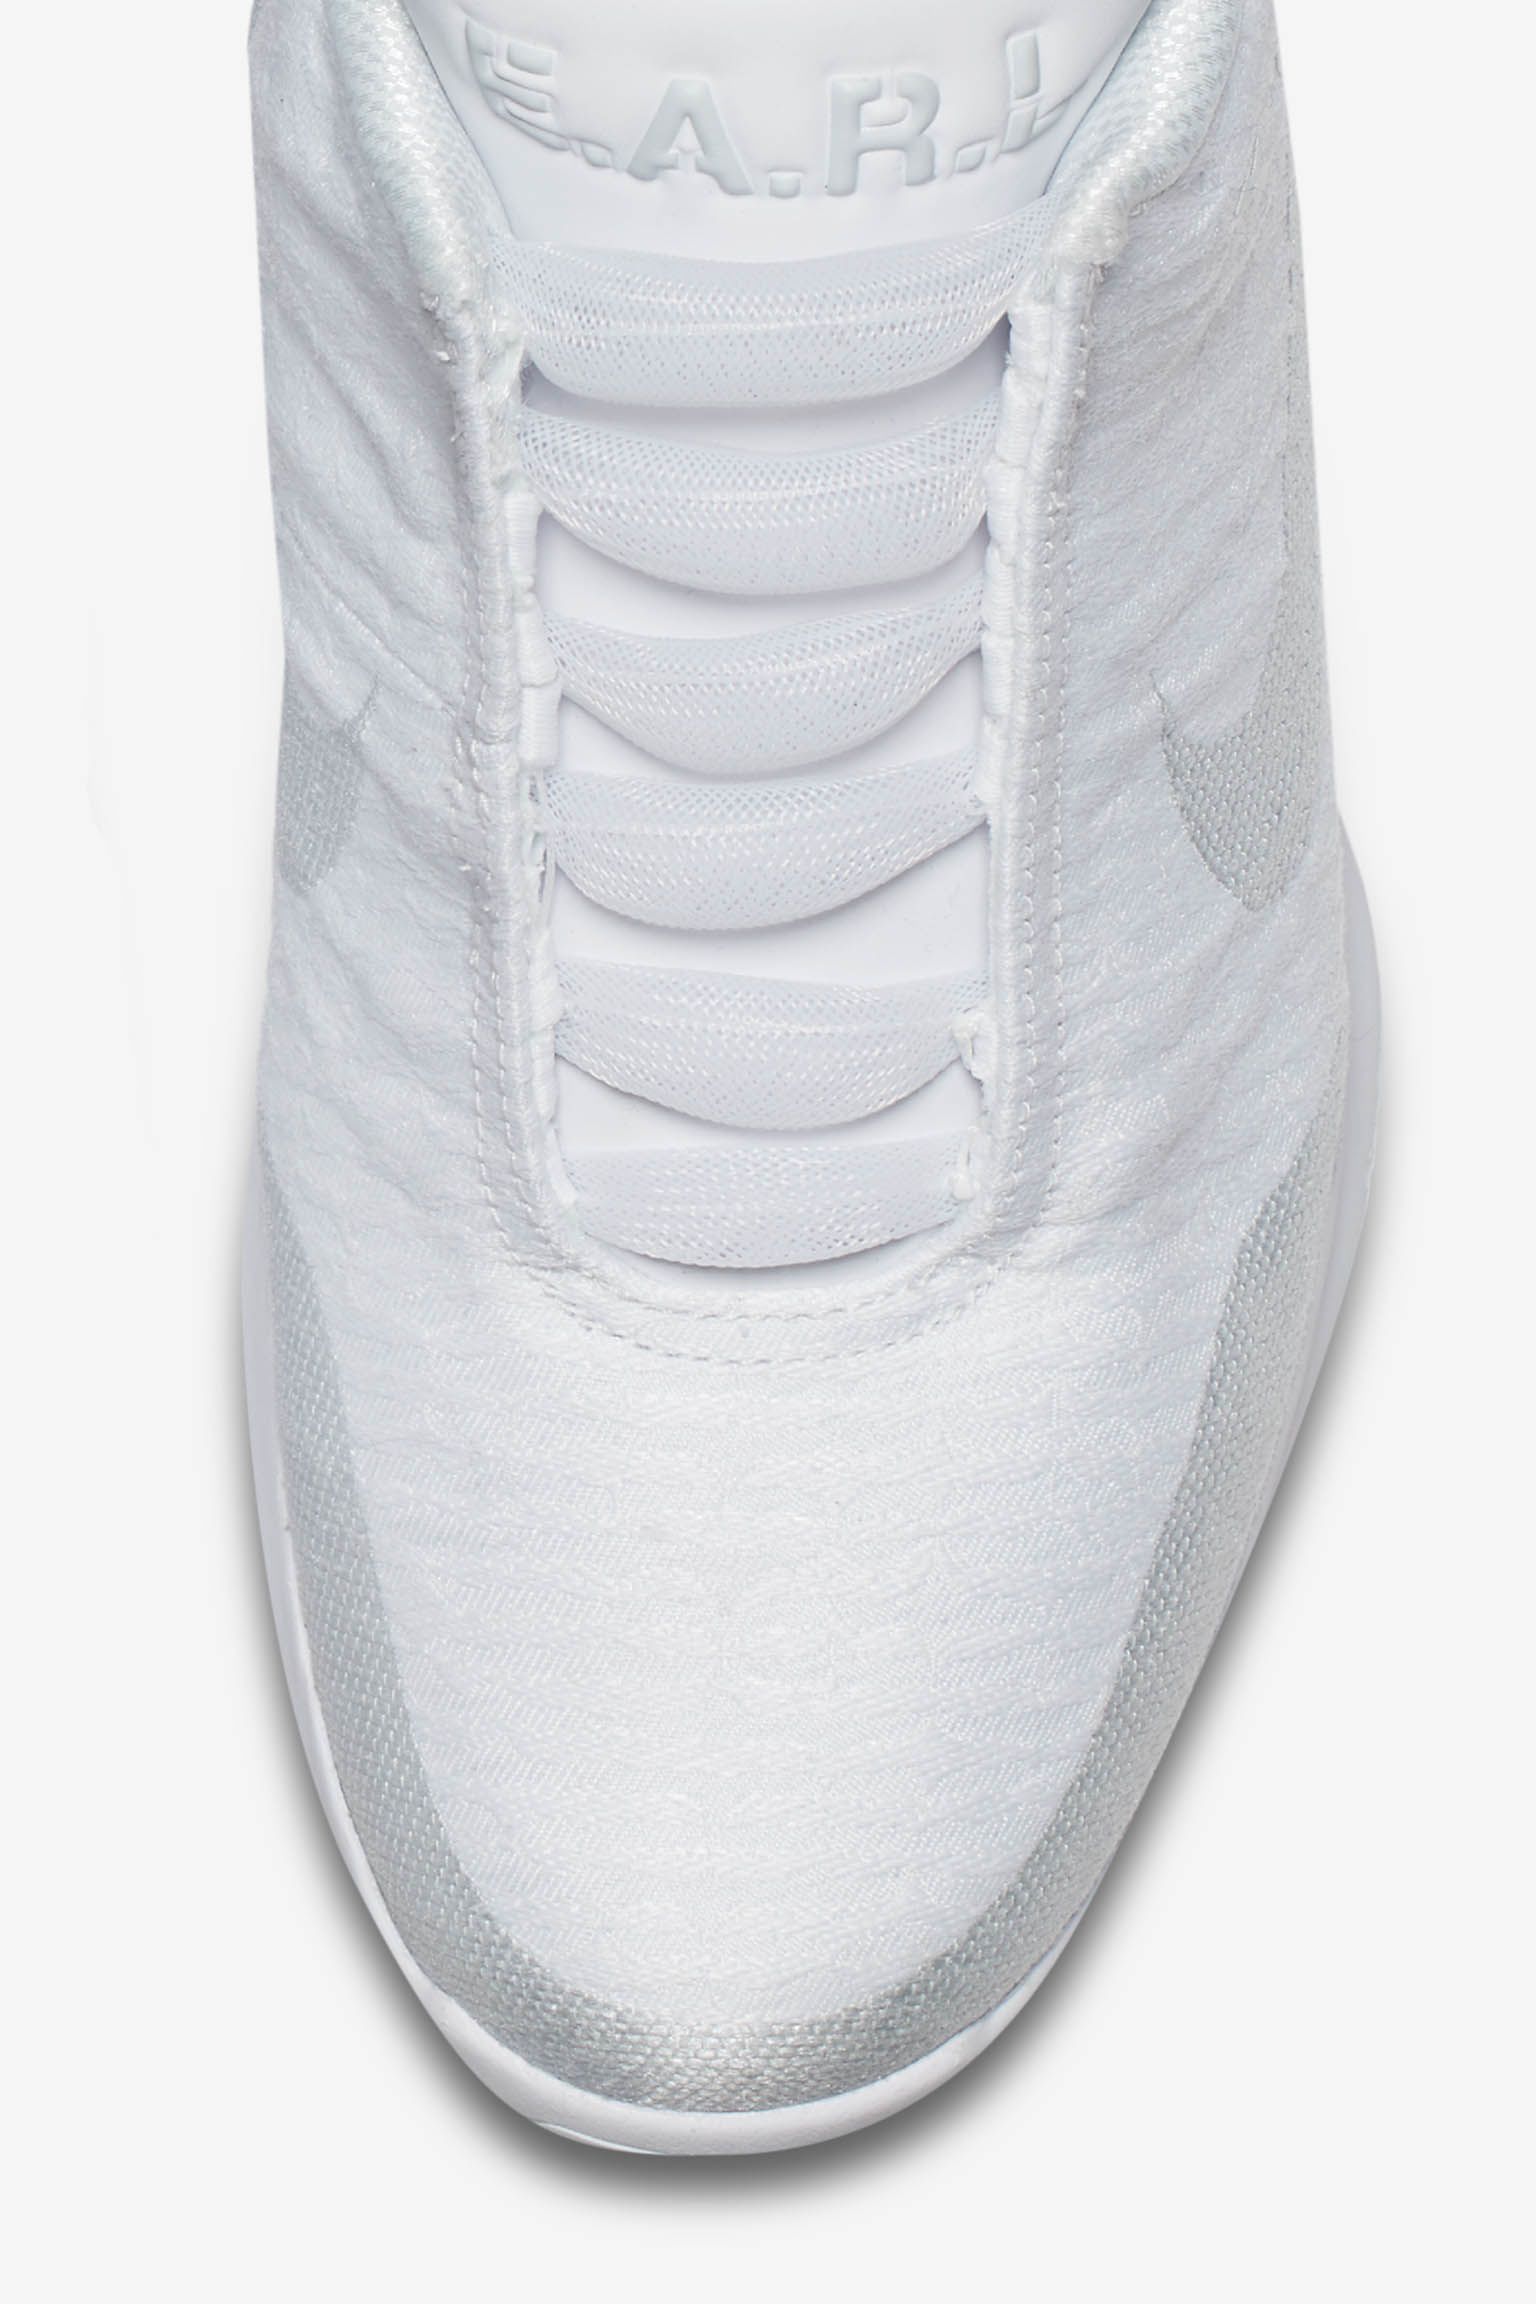 de de las Nike HyperAdapt "White &amp; Pure Platinum". Nike SNKRS ES